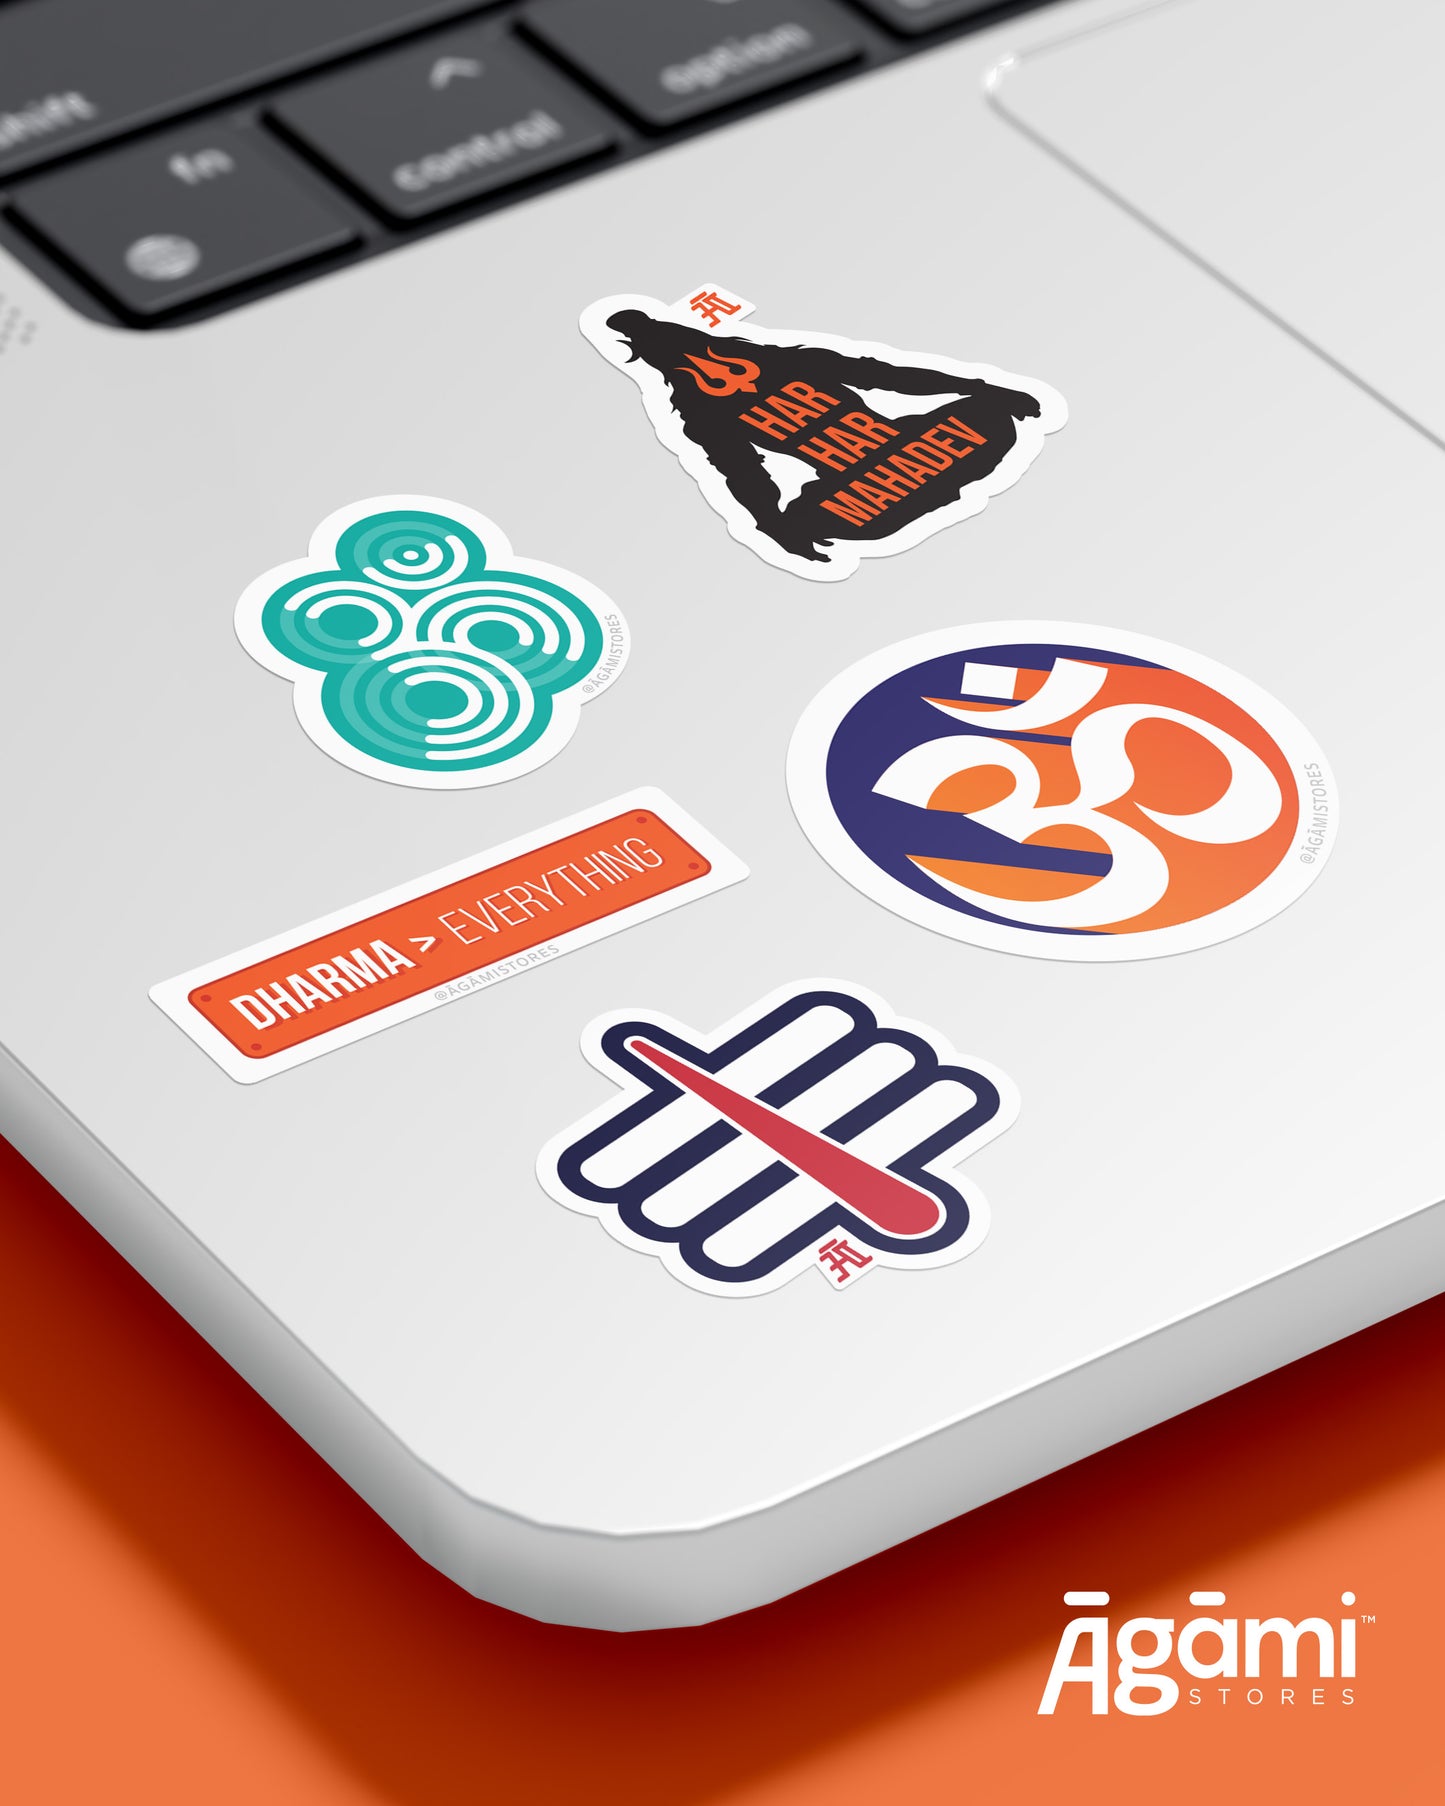 Har Har Mahadev | Laptop & Mobile Sticker